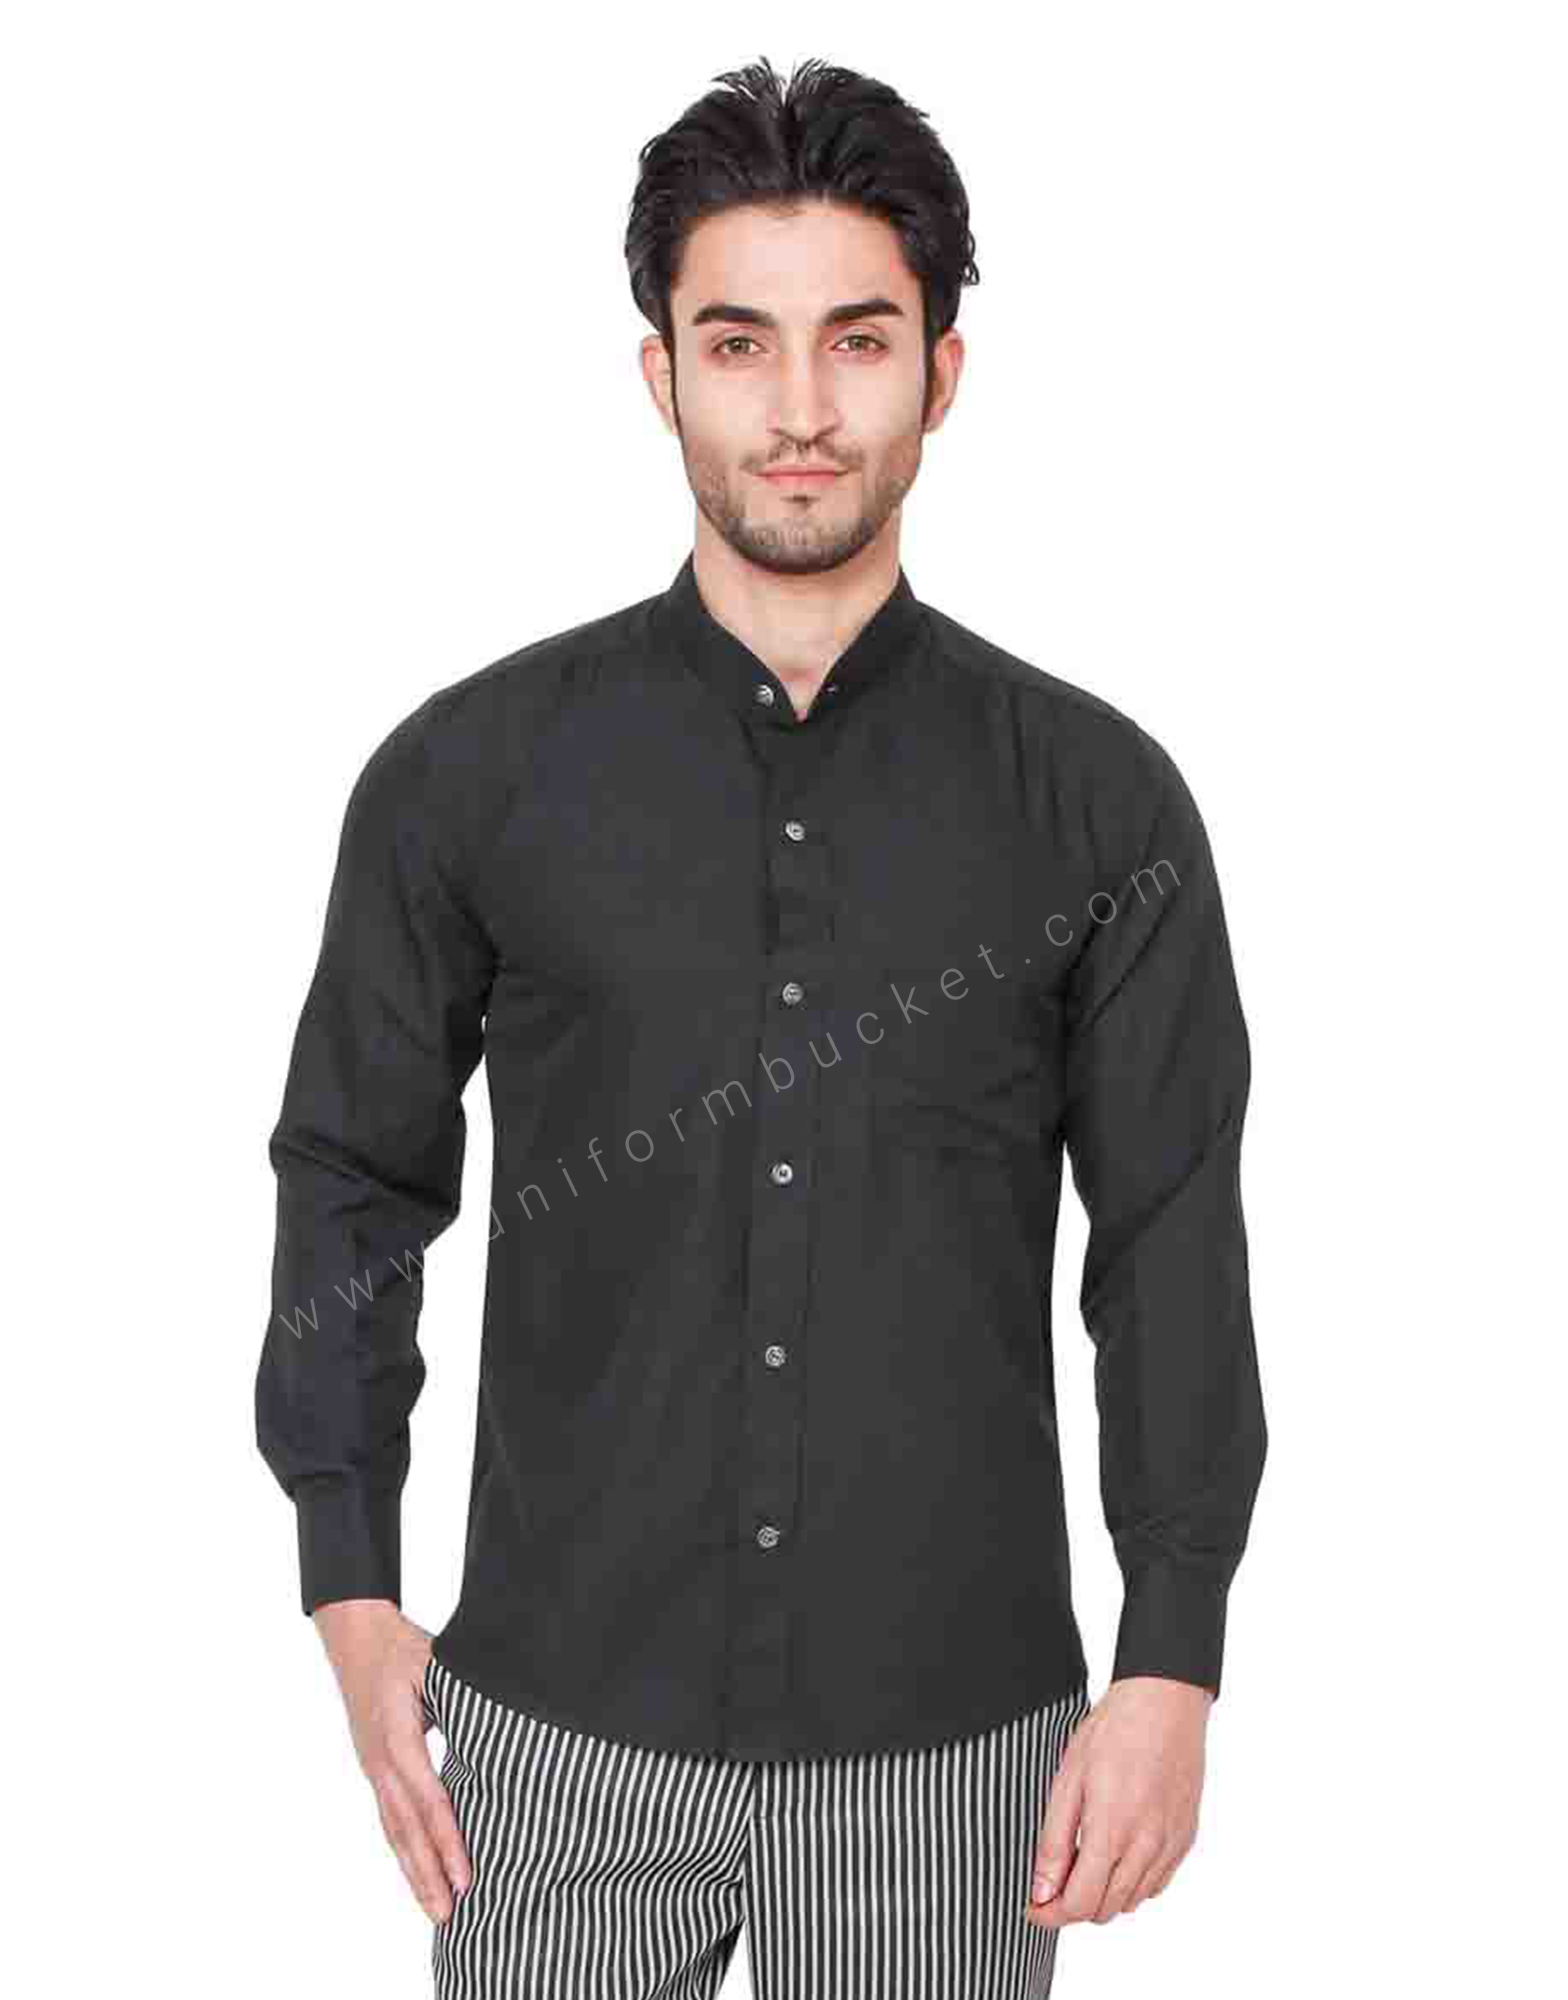 Buy Ban Collar Black Shirt For Men Online @ Best Prices in India ...